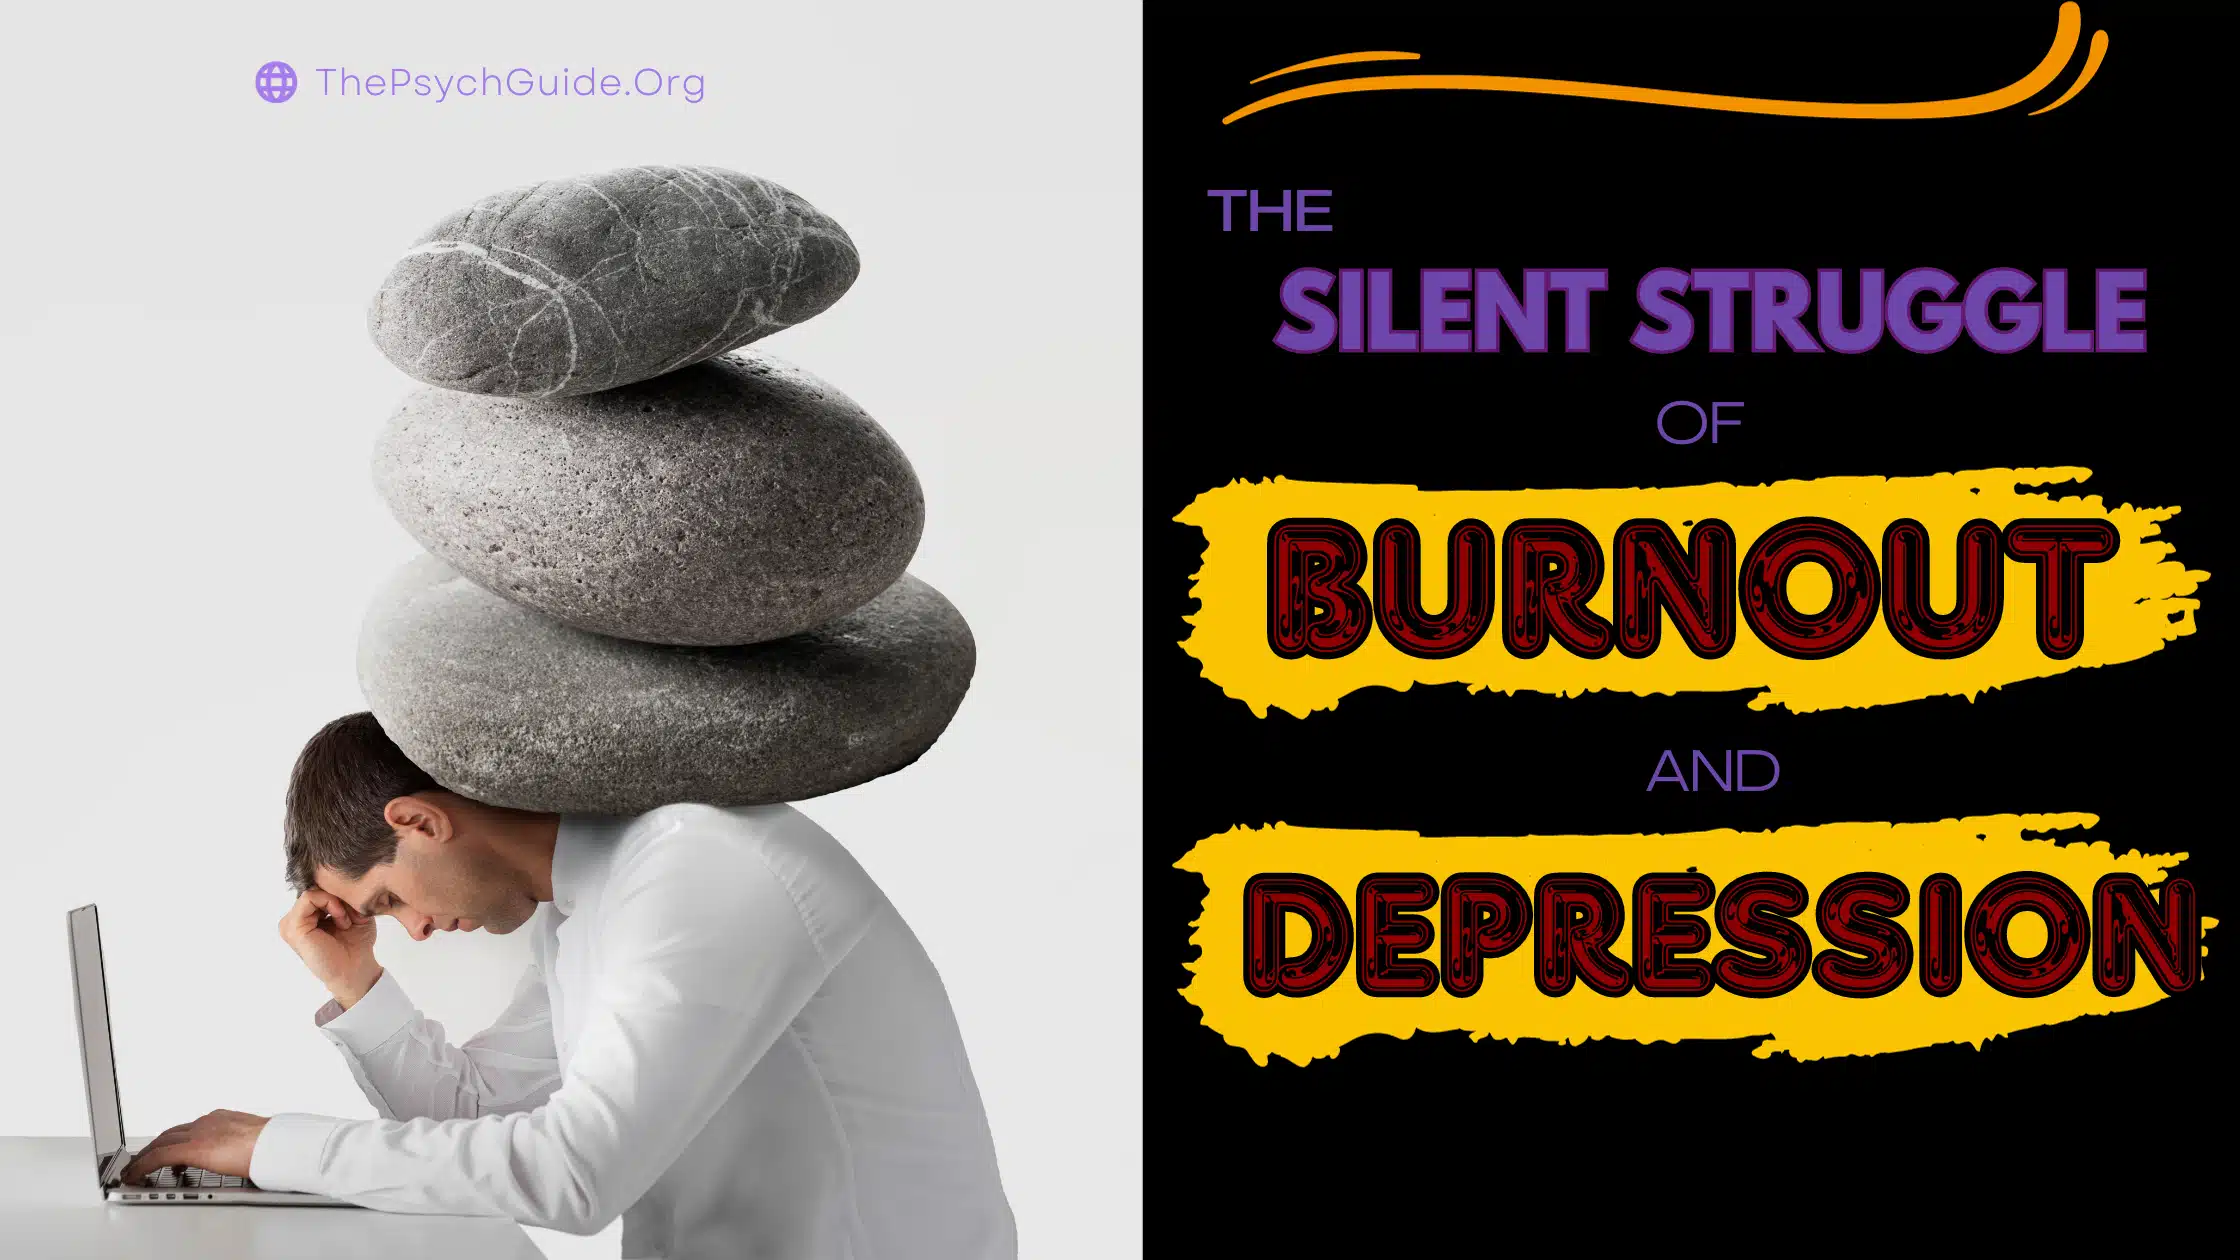 Burnout and depression symptoms